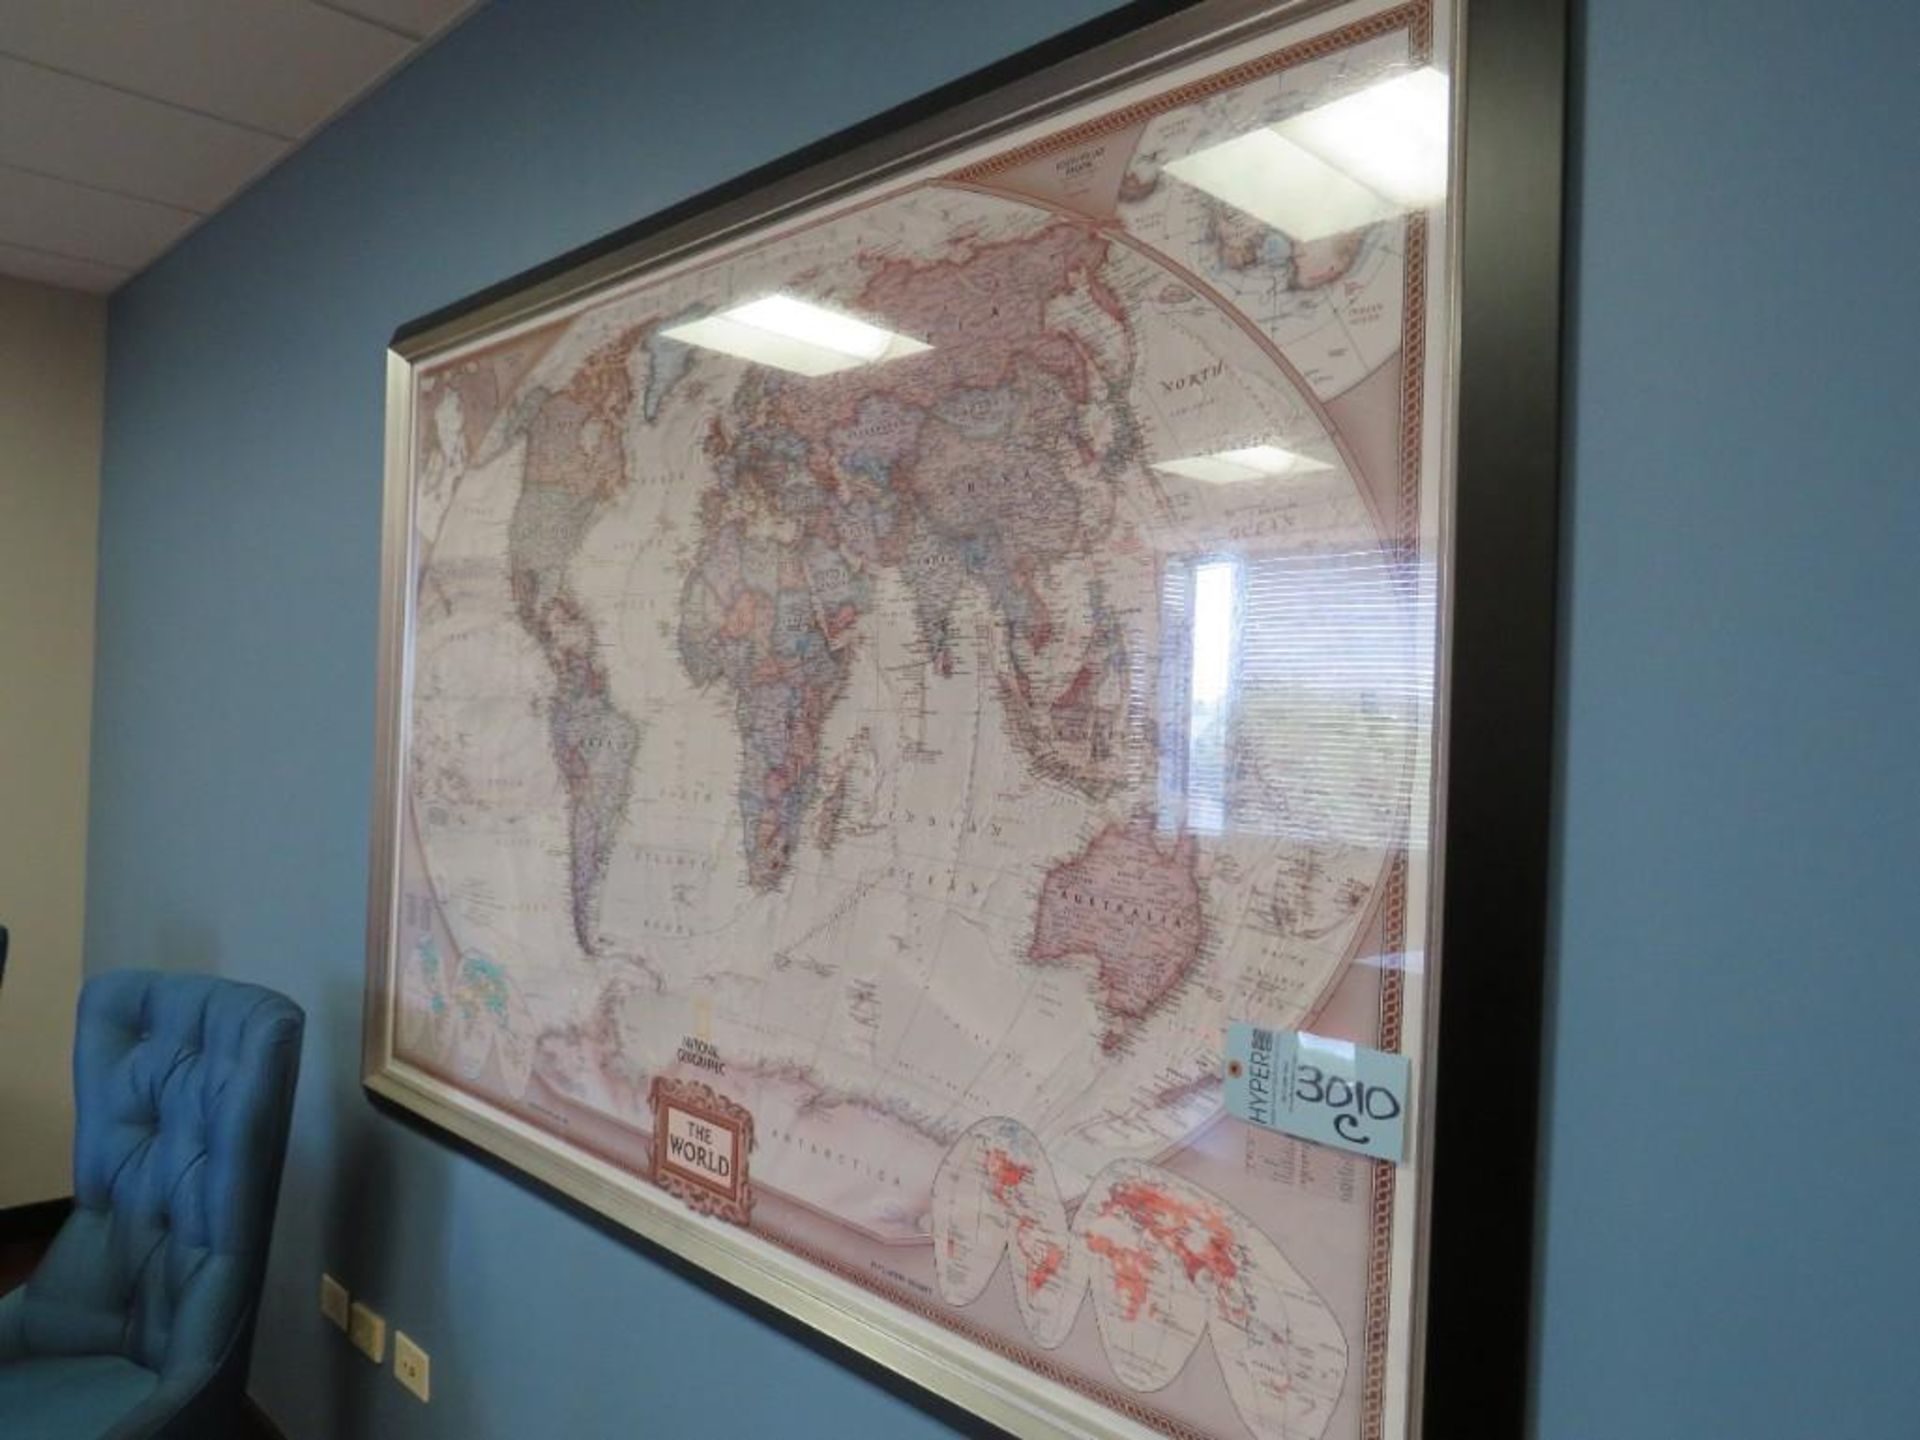 Lot c/o: World Map 78" x 54", Howard Miller Round Decorative Wall Clock 36"diam. - Image 4 of 4